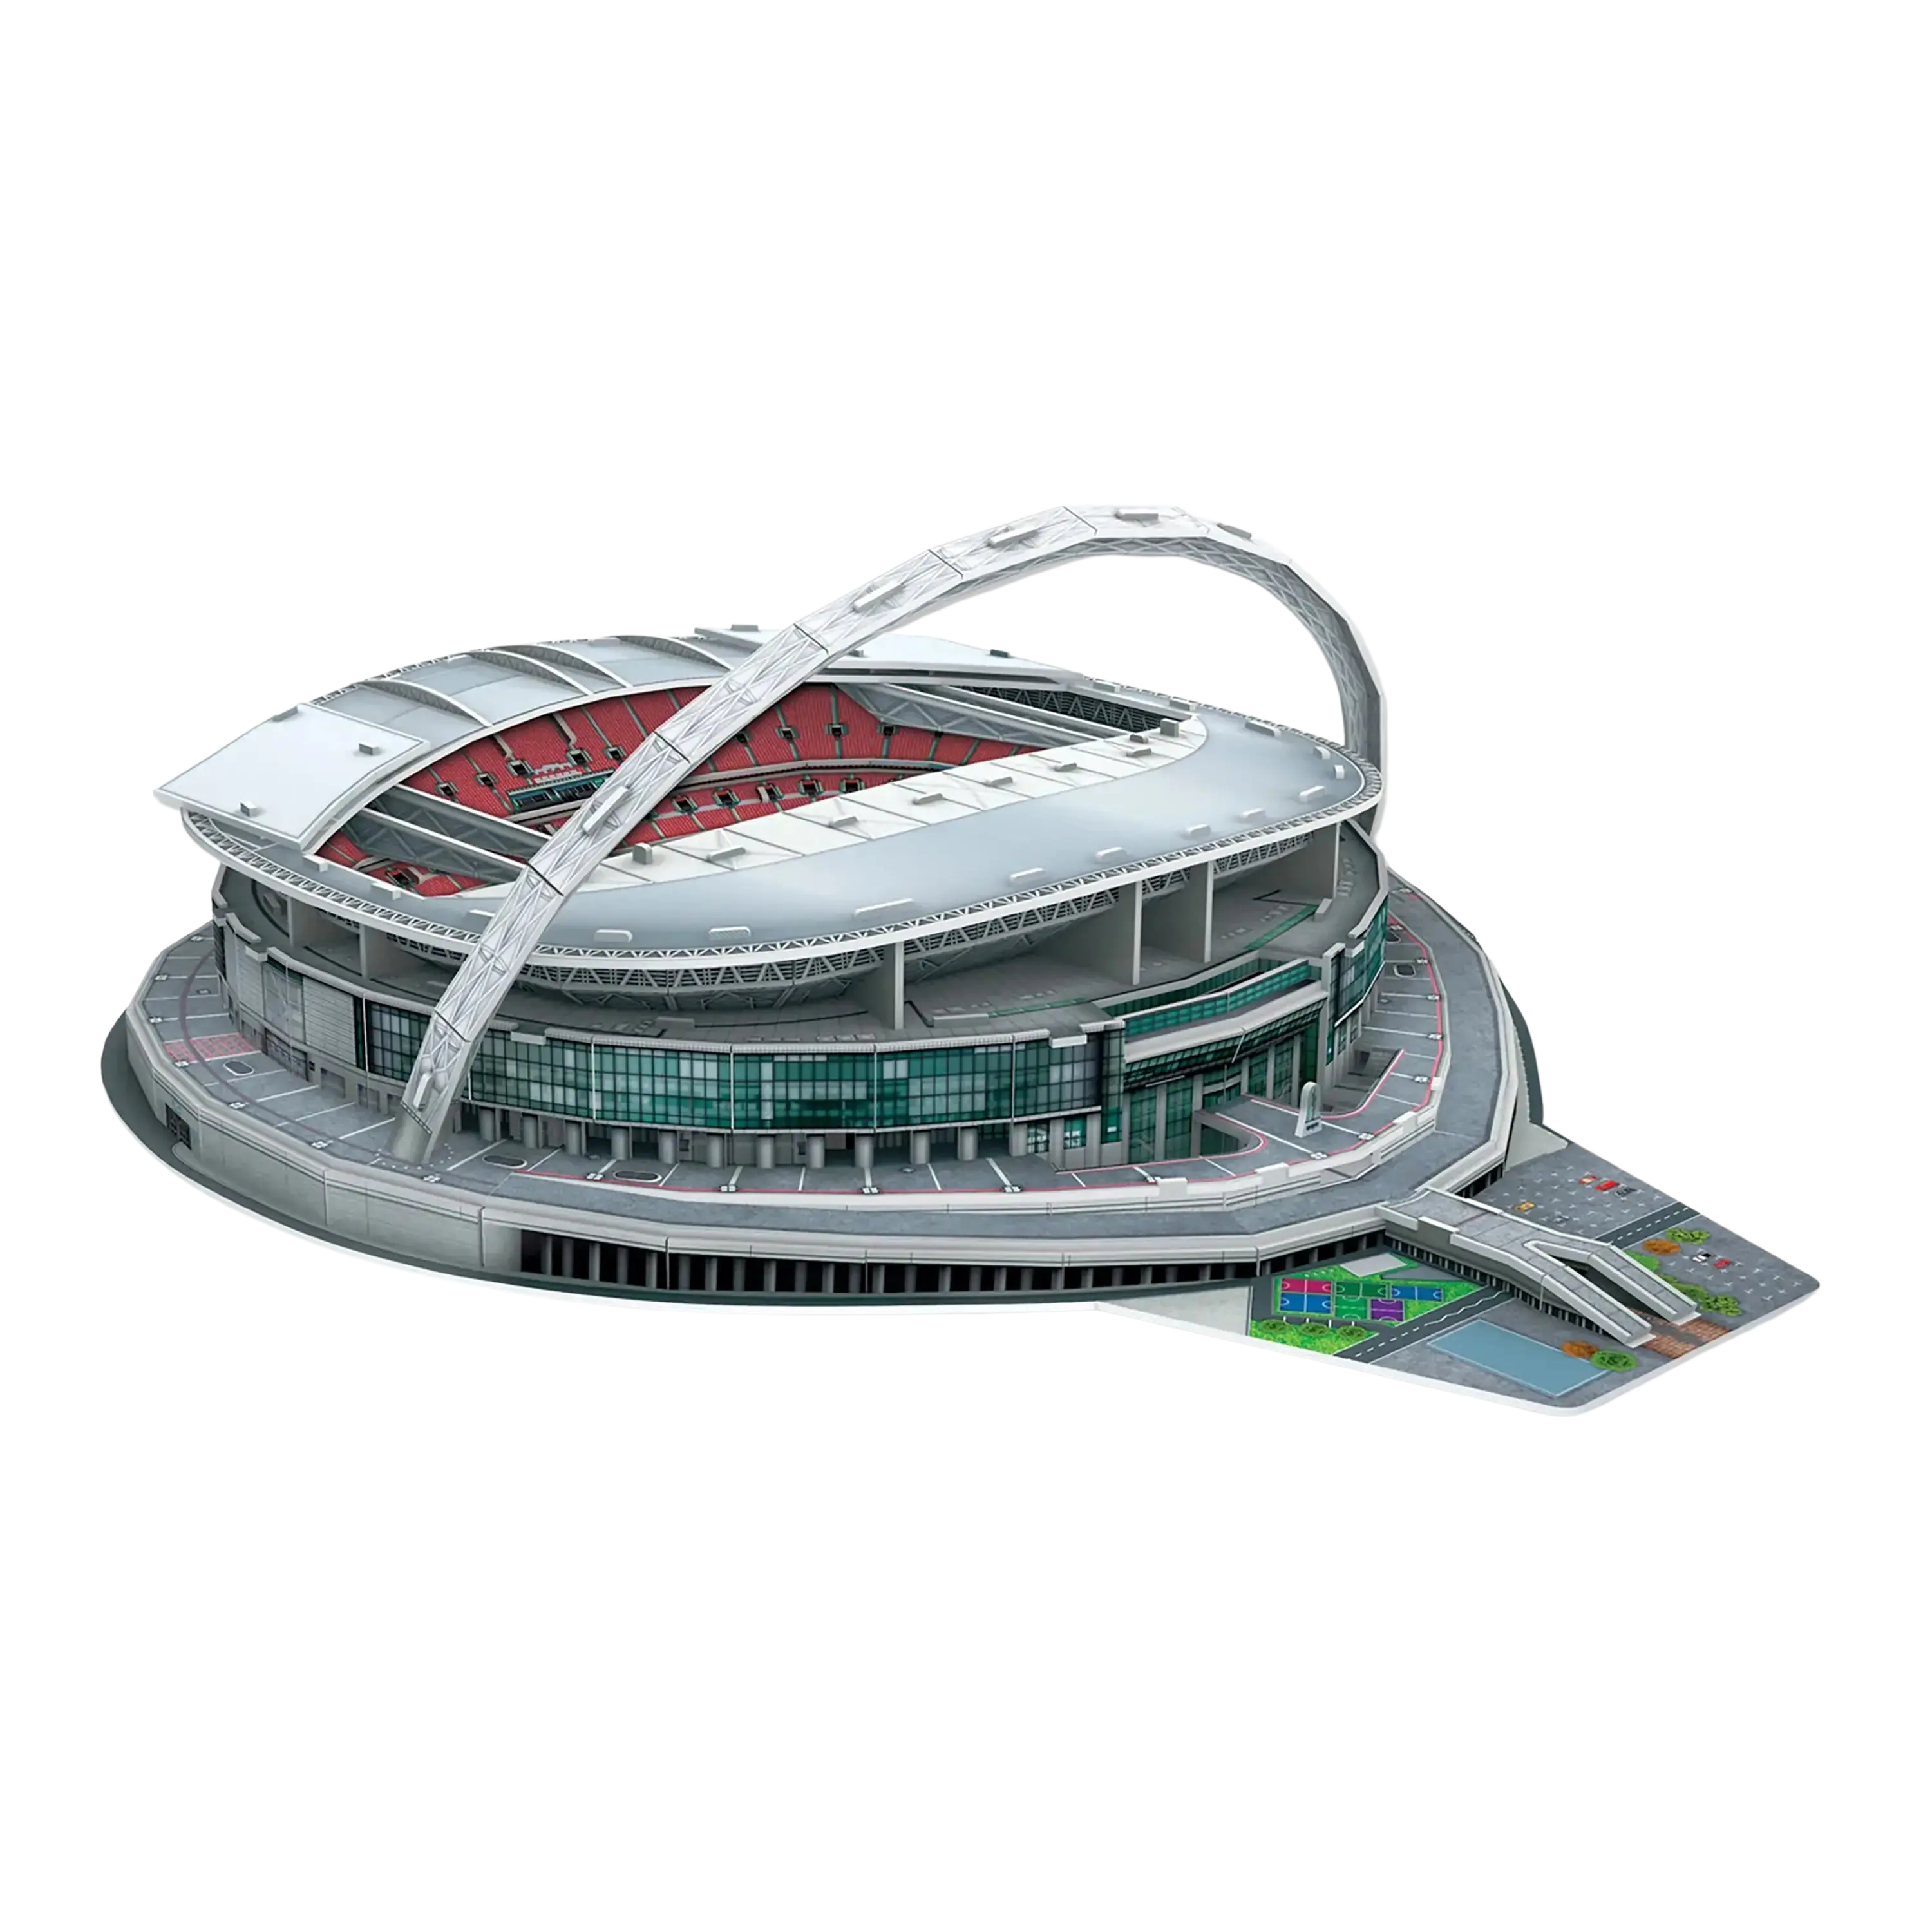 University Games Wembley Stadium 3D Puzzle